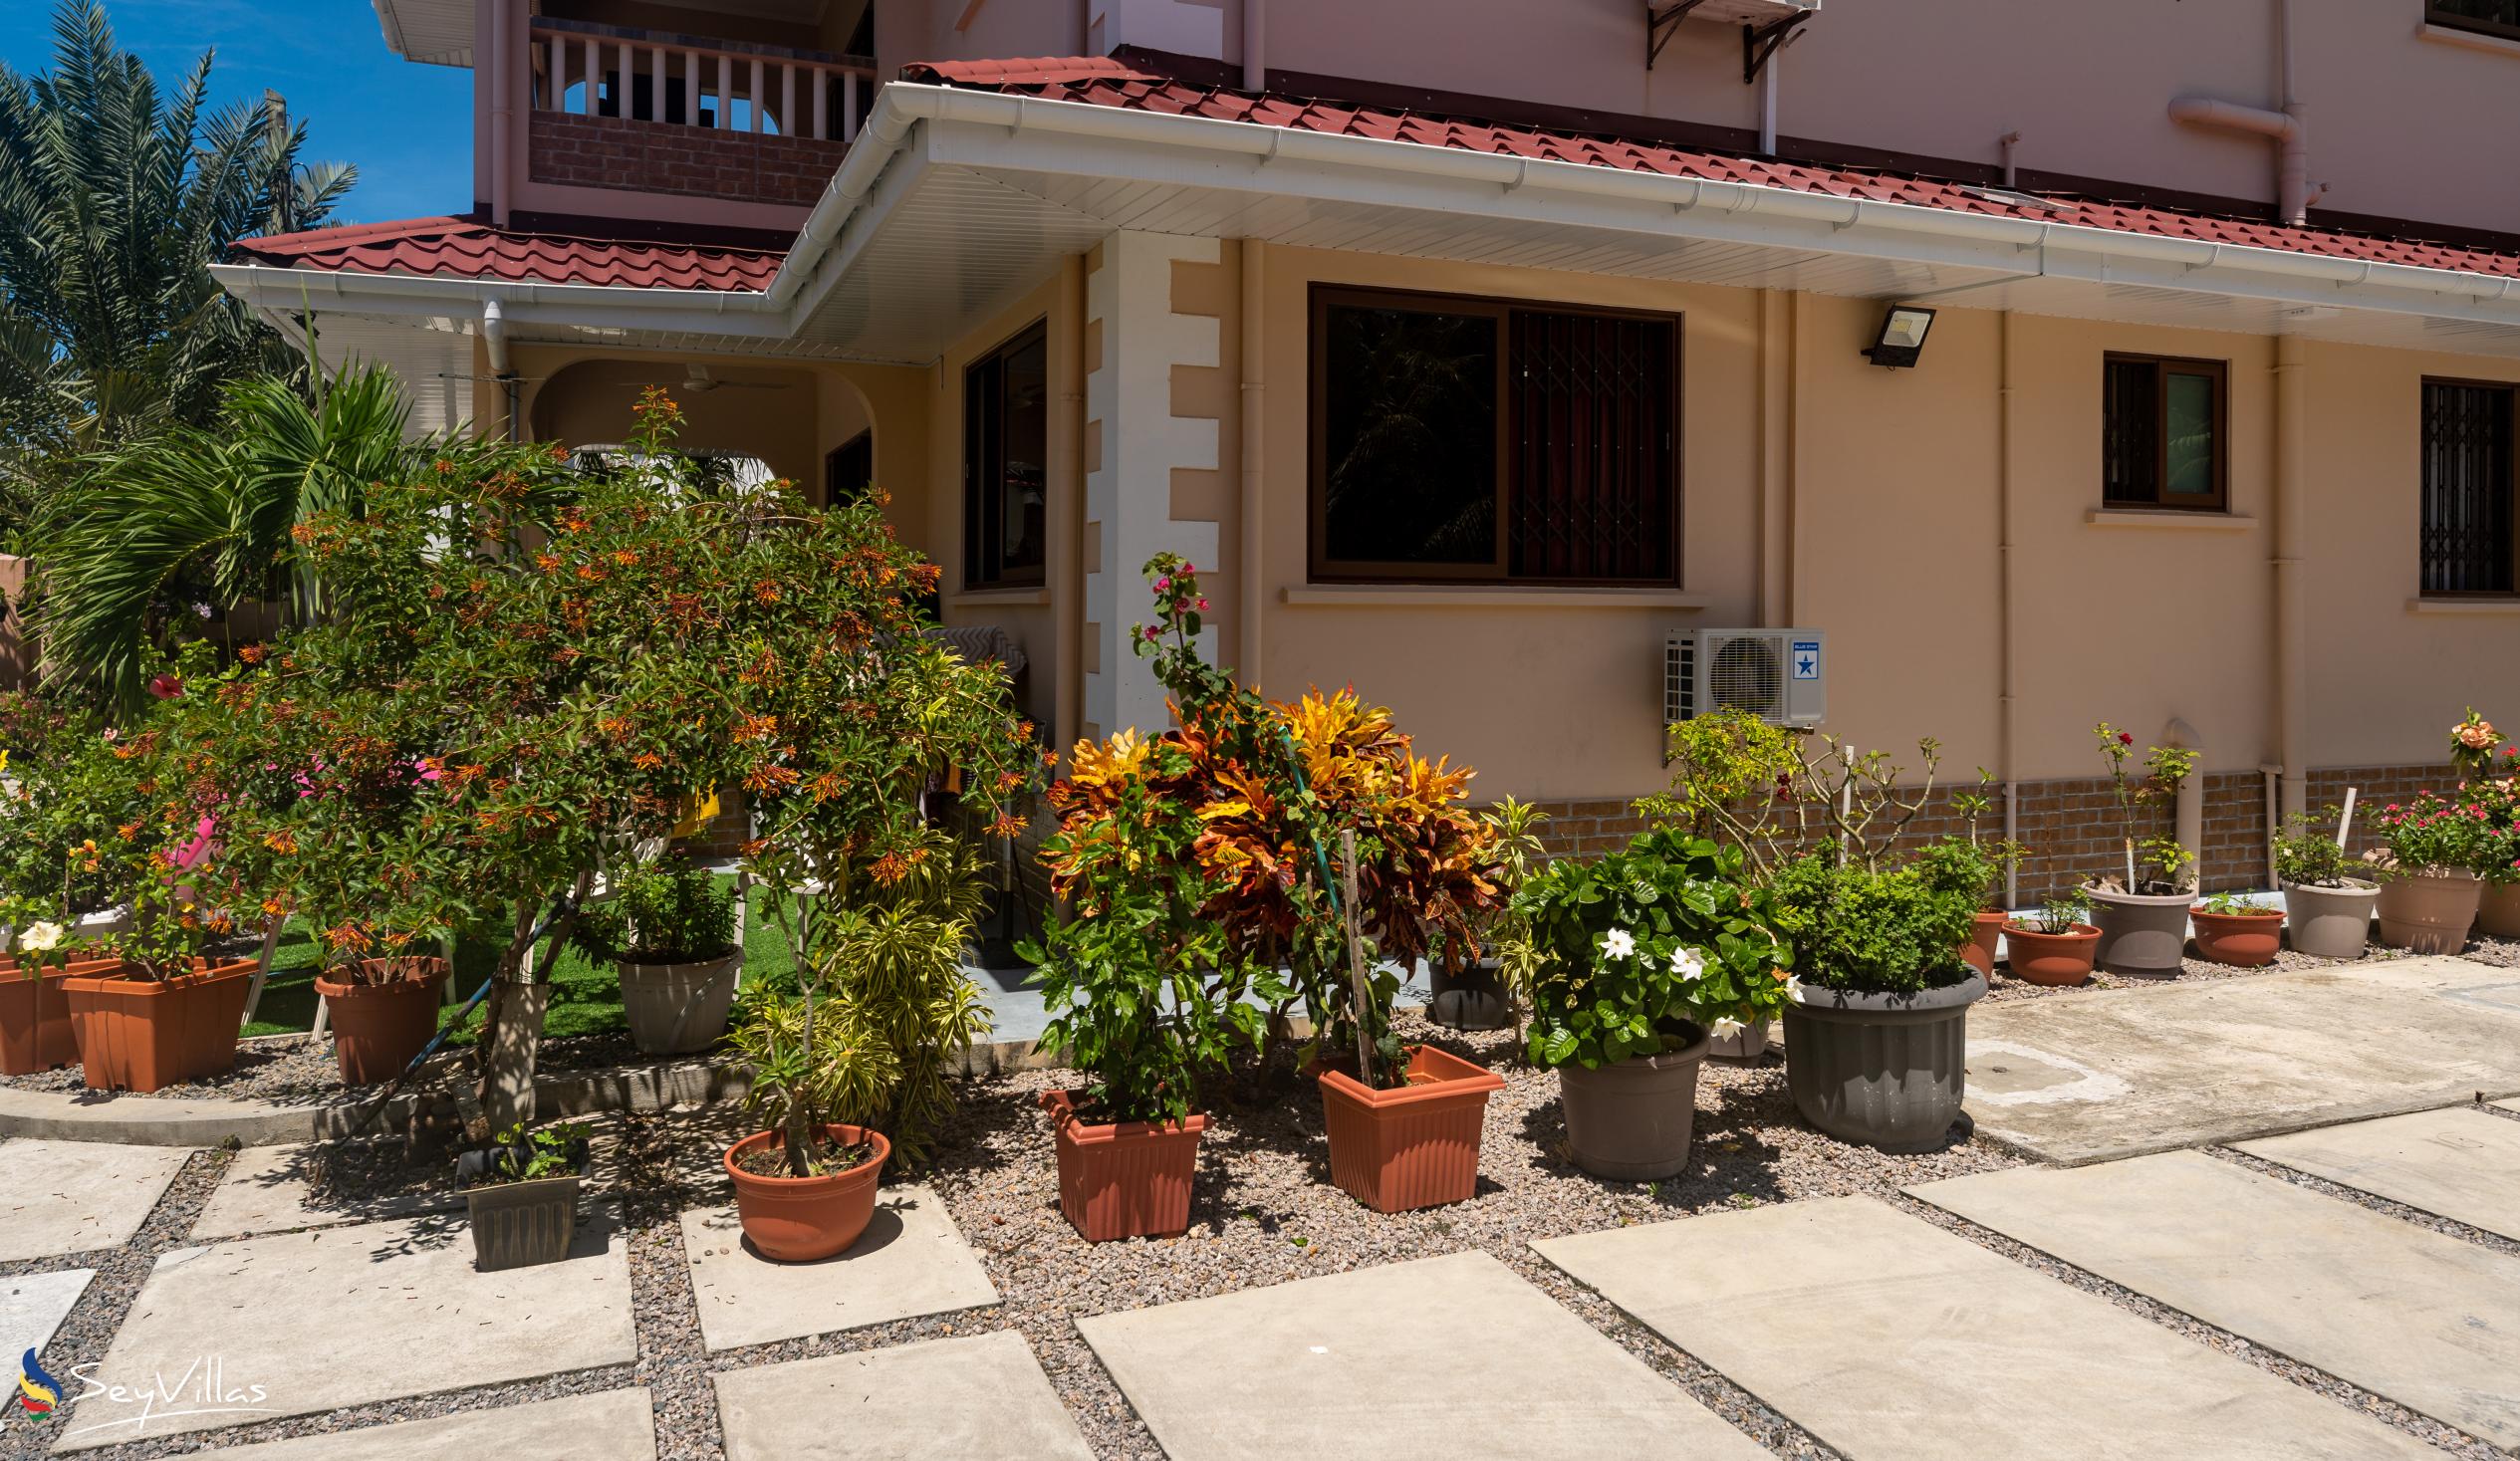 Foto 10: Erica's Residence Self Catering Apartment - Aussenbereich - Mahé (Seychellen)